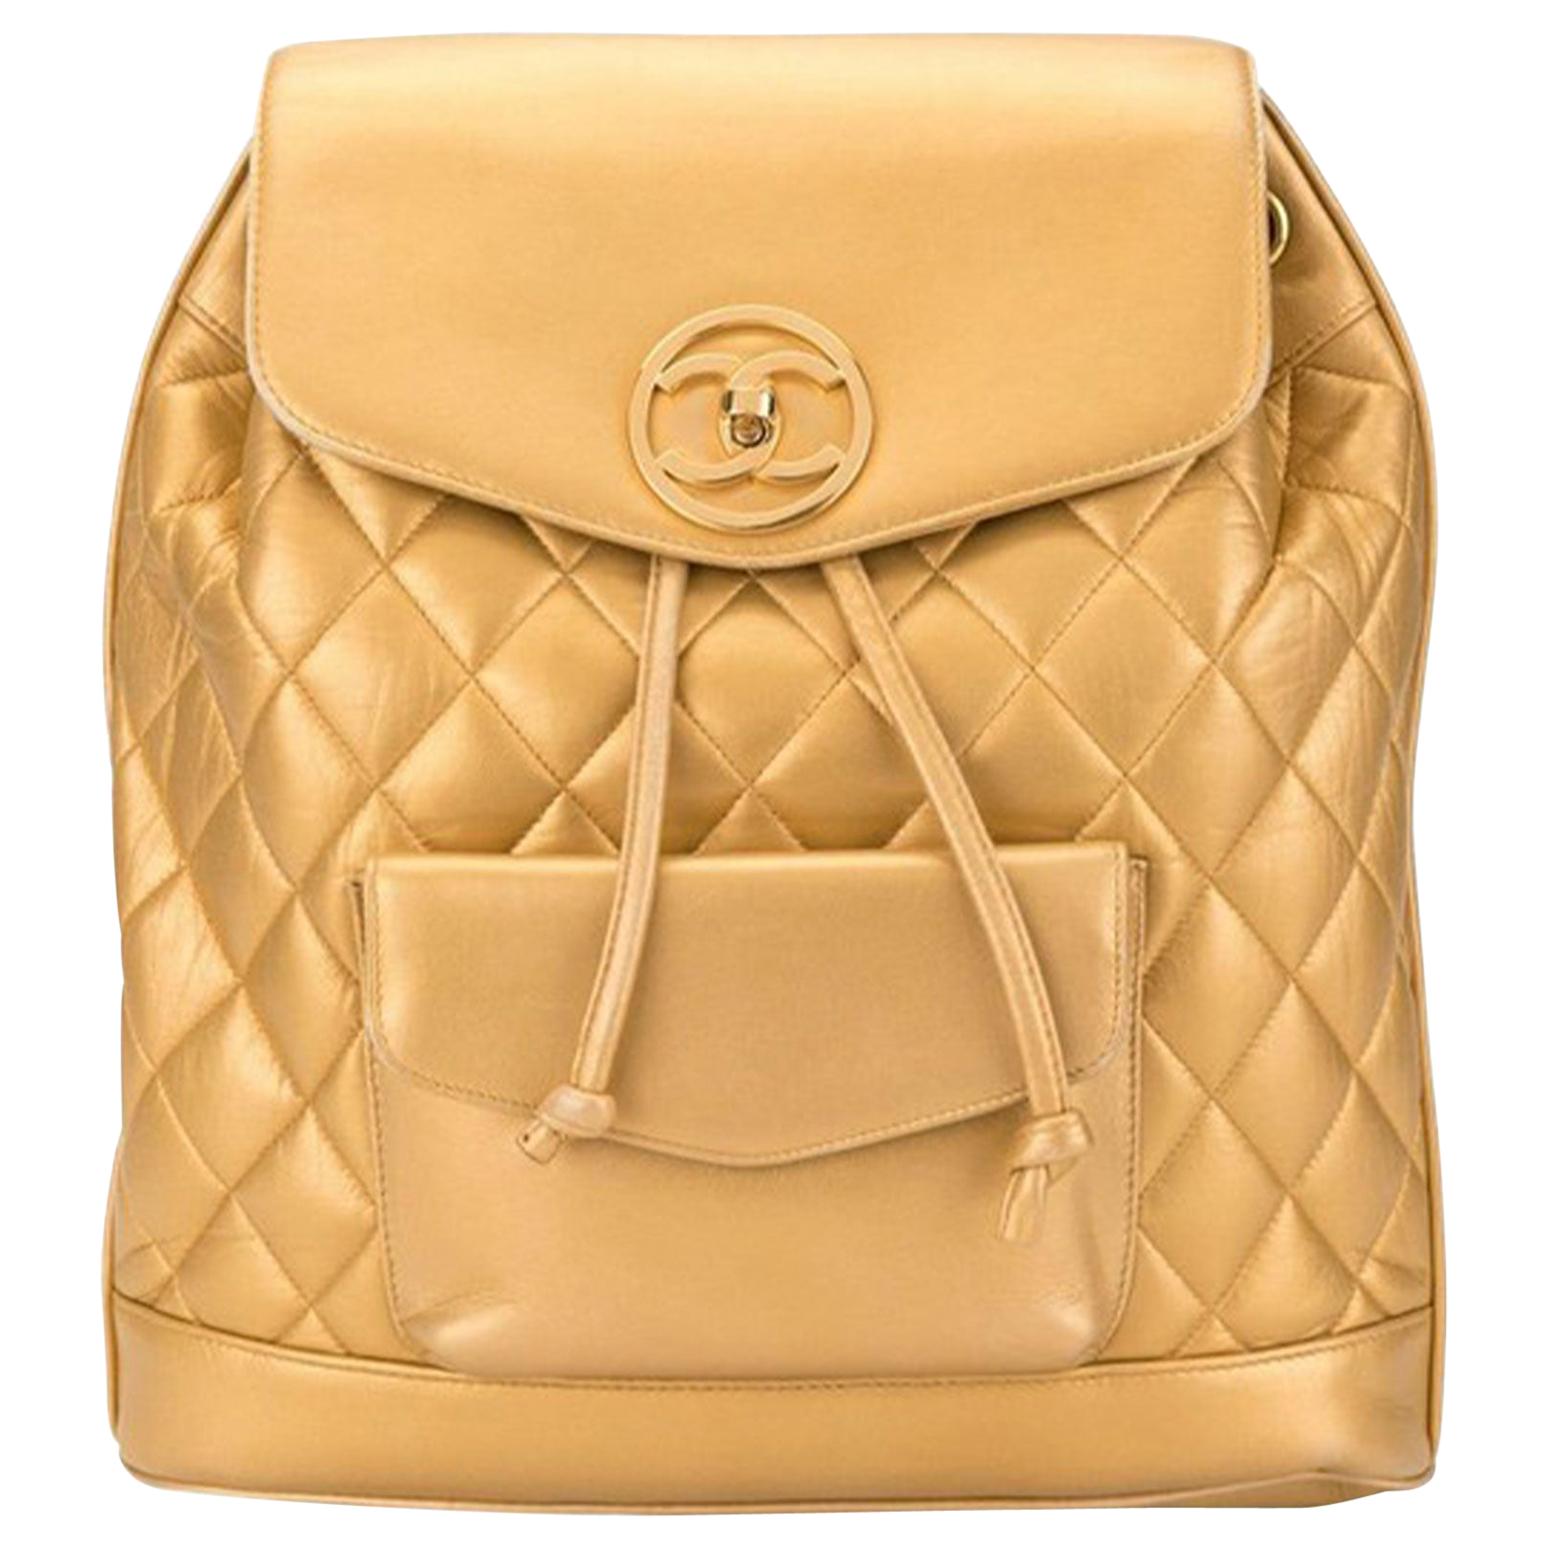 Chanel 1990s Vintage Rare Rucksack Gold Lambskin Leather Backpack